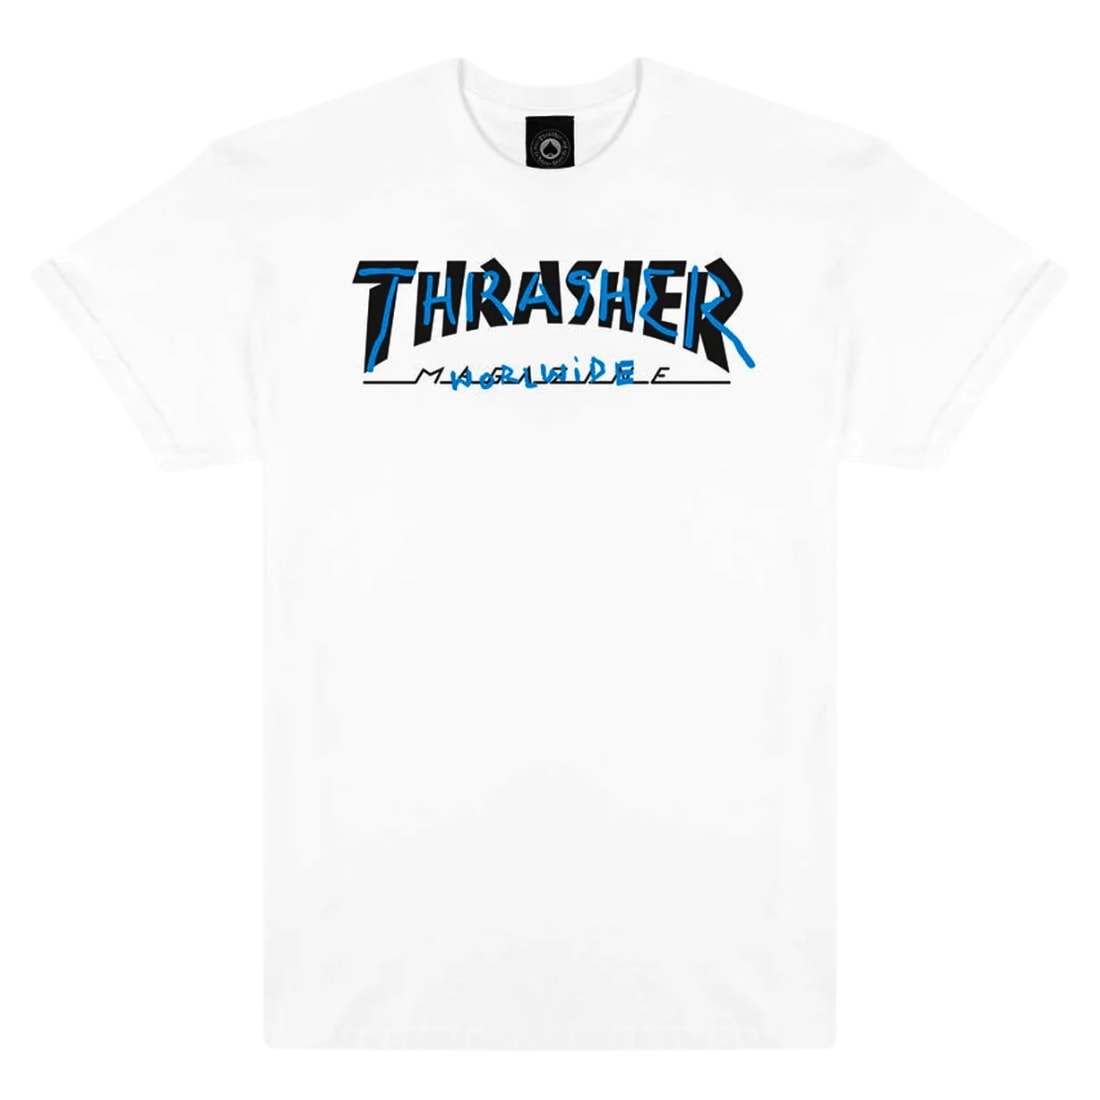 Thrasher Trademark T-Shirt - White - Mens Graphic T-Shirt by Thrasher